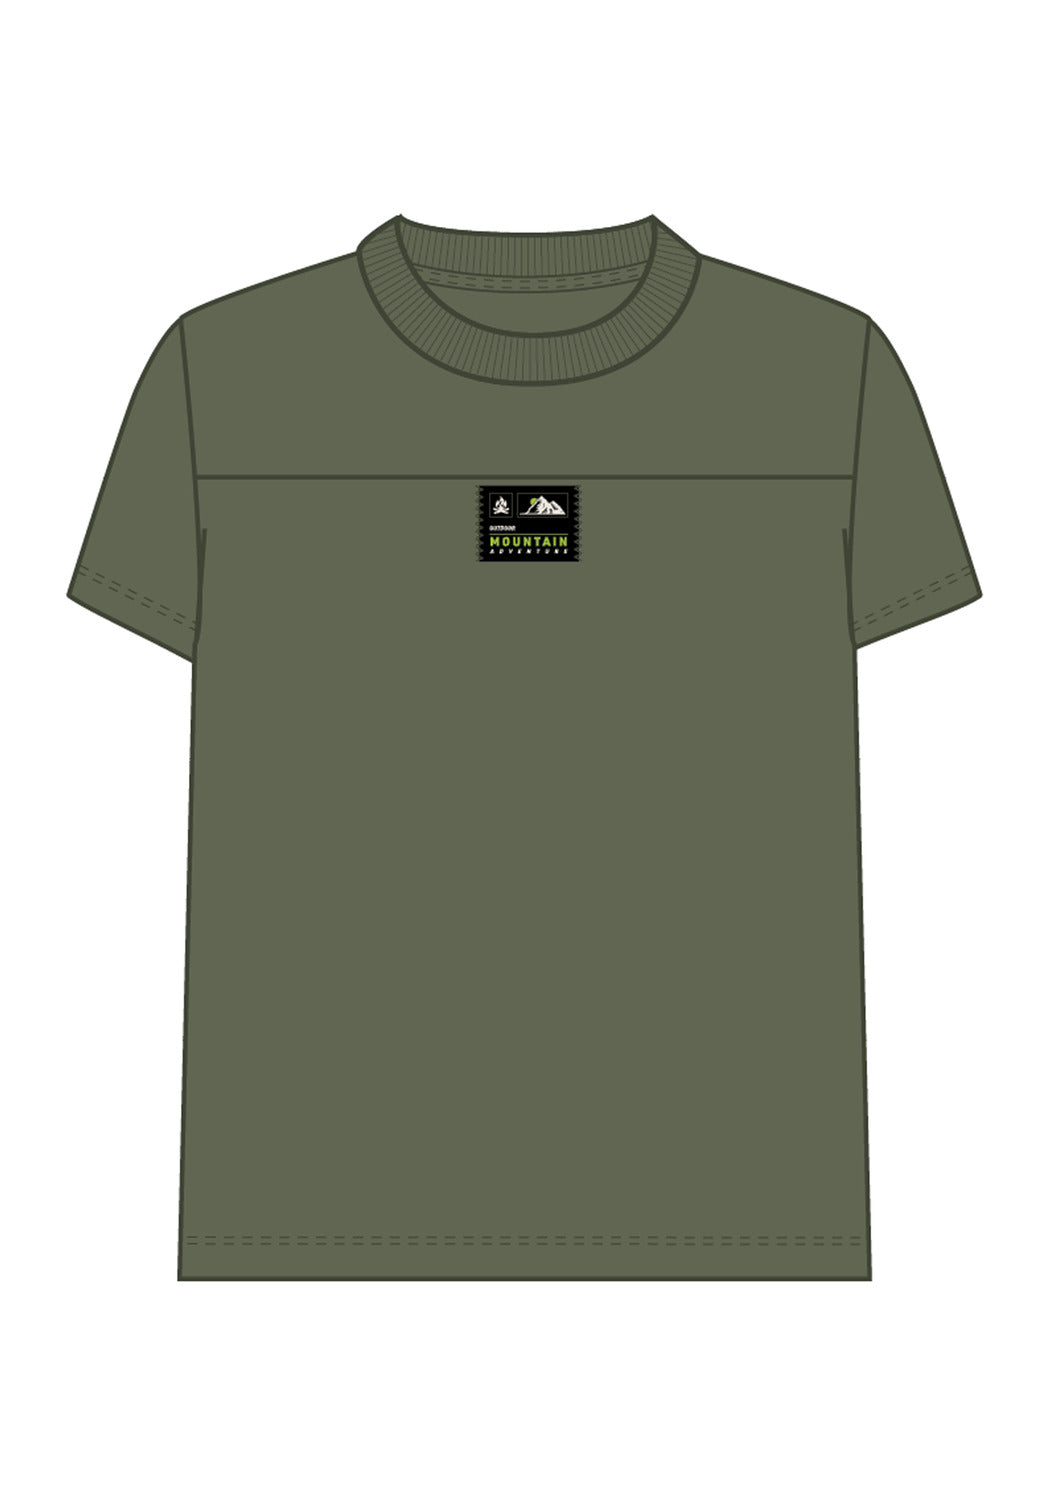 NKMNATAN T-Shirts & Tops - Four Leaf Clover